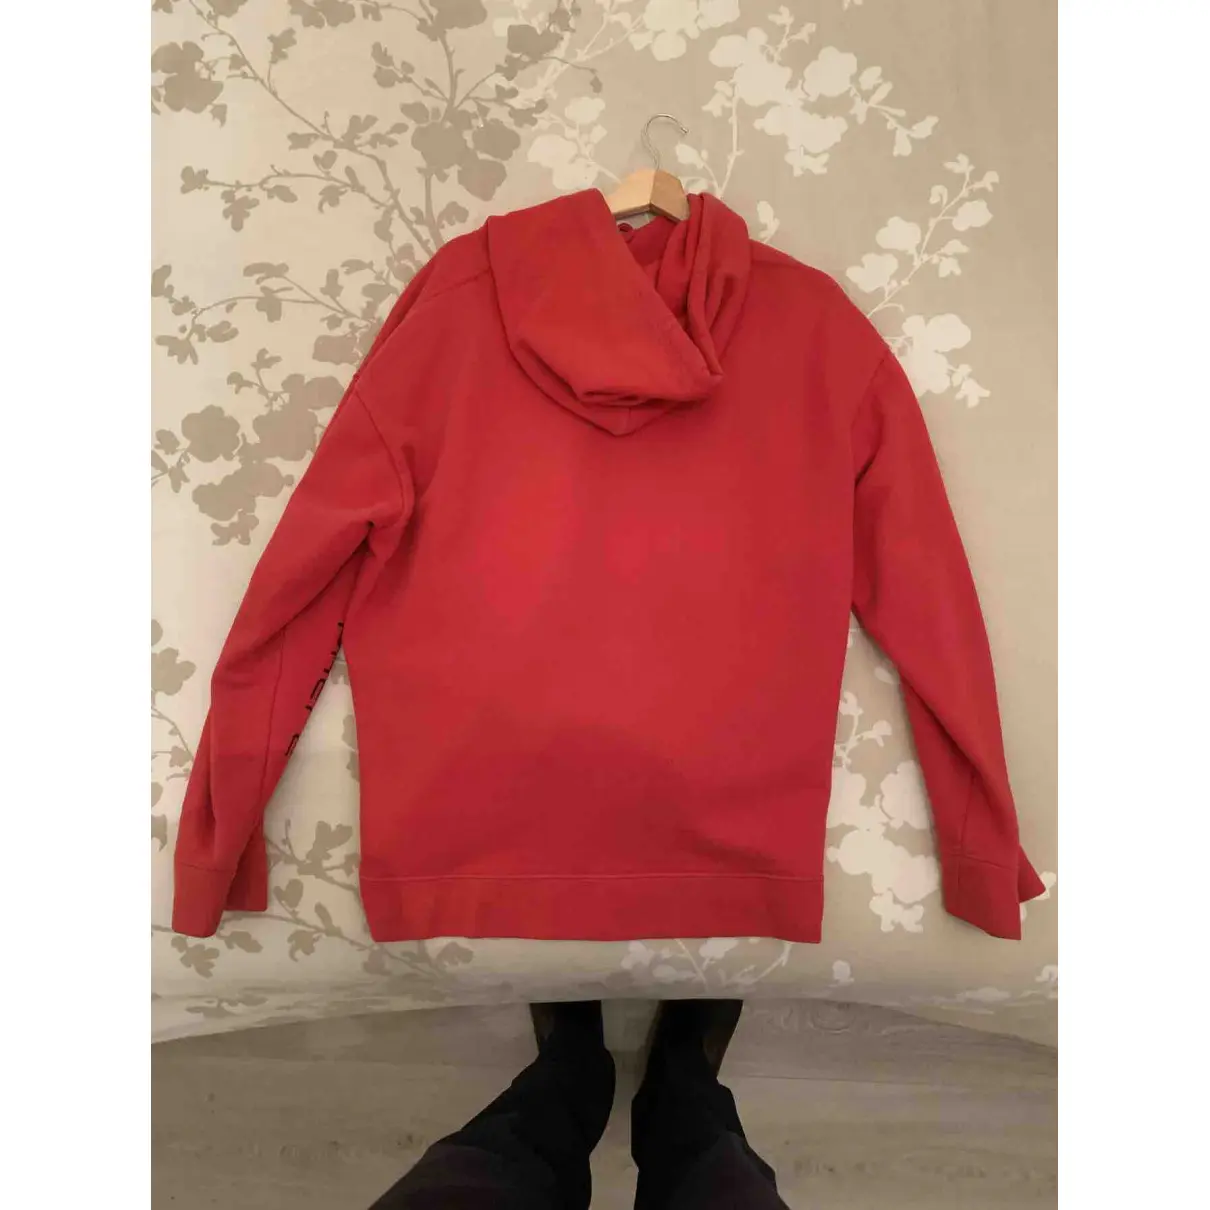 Buy Raf Simons Red Cotton Knitwear & Sweatshirt online